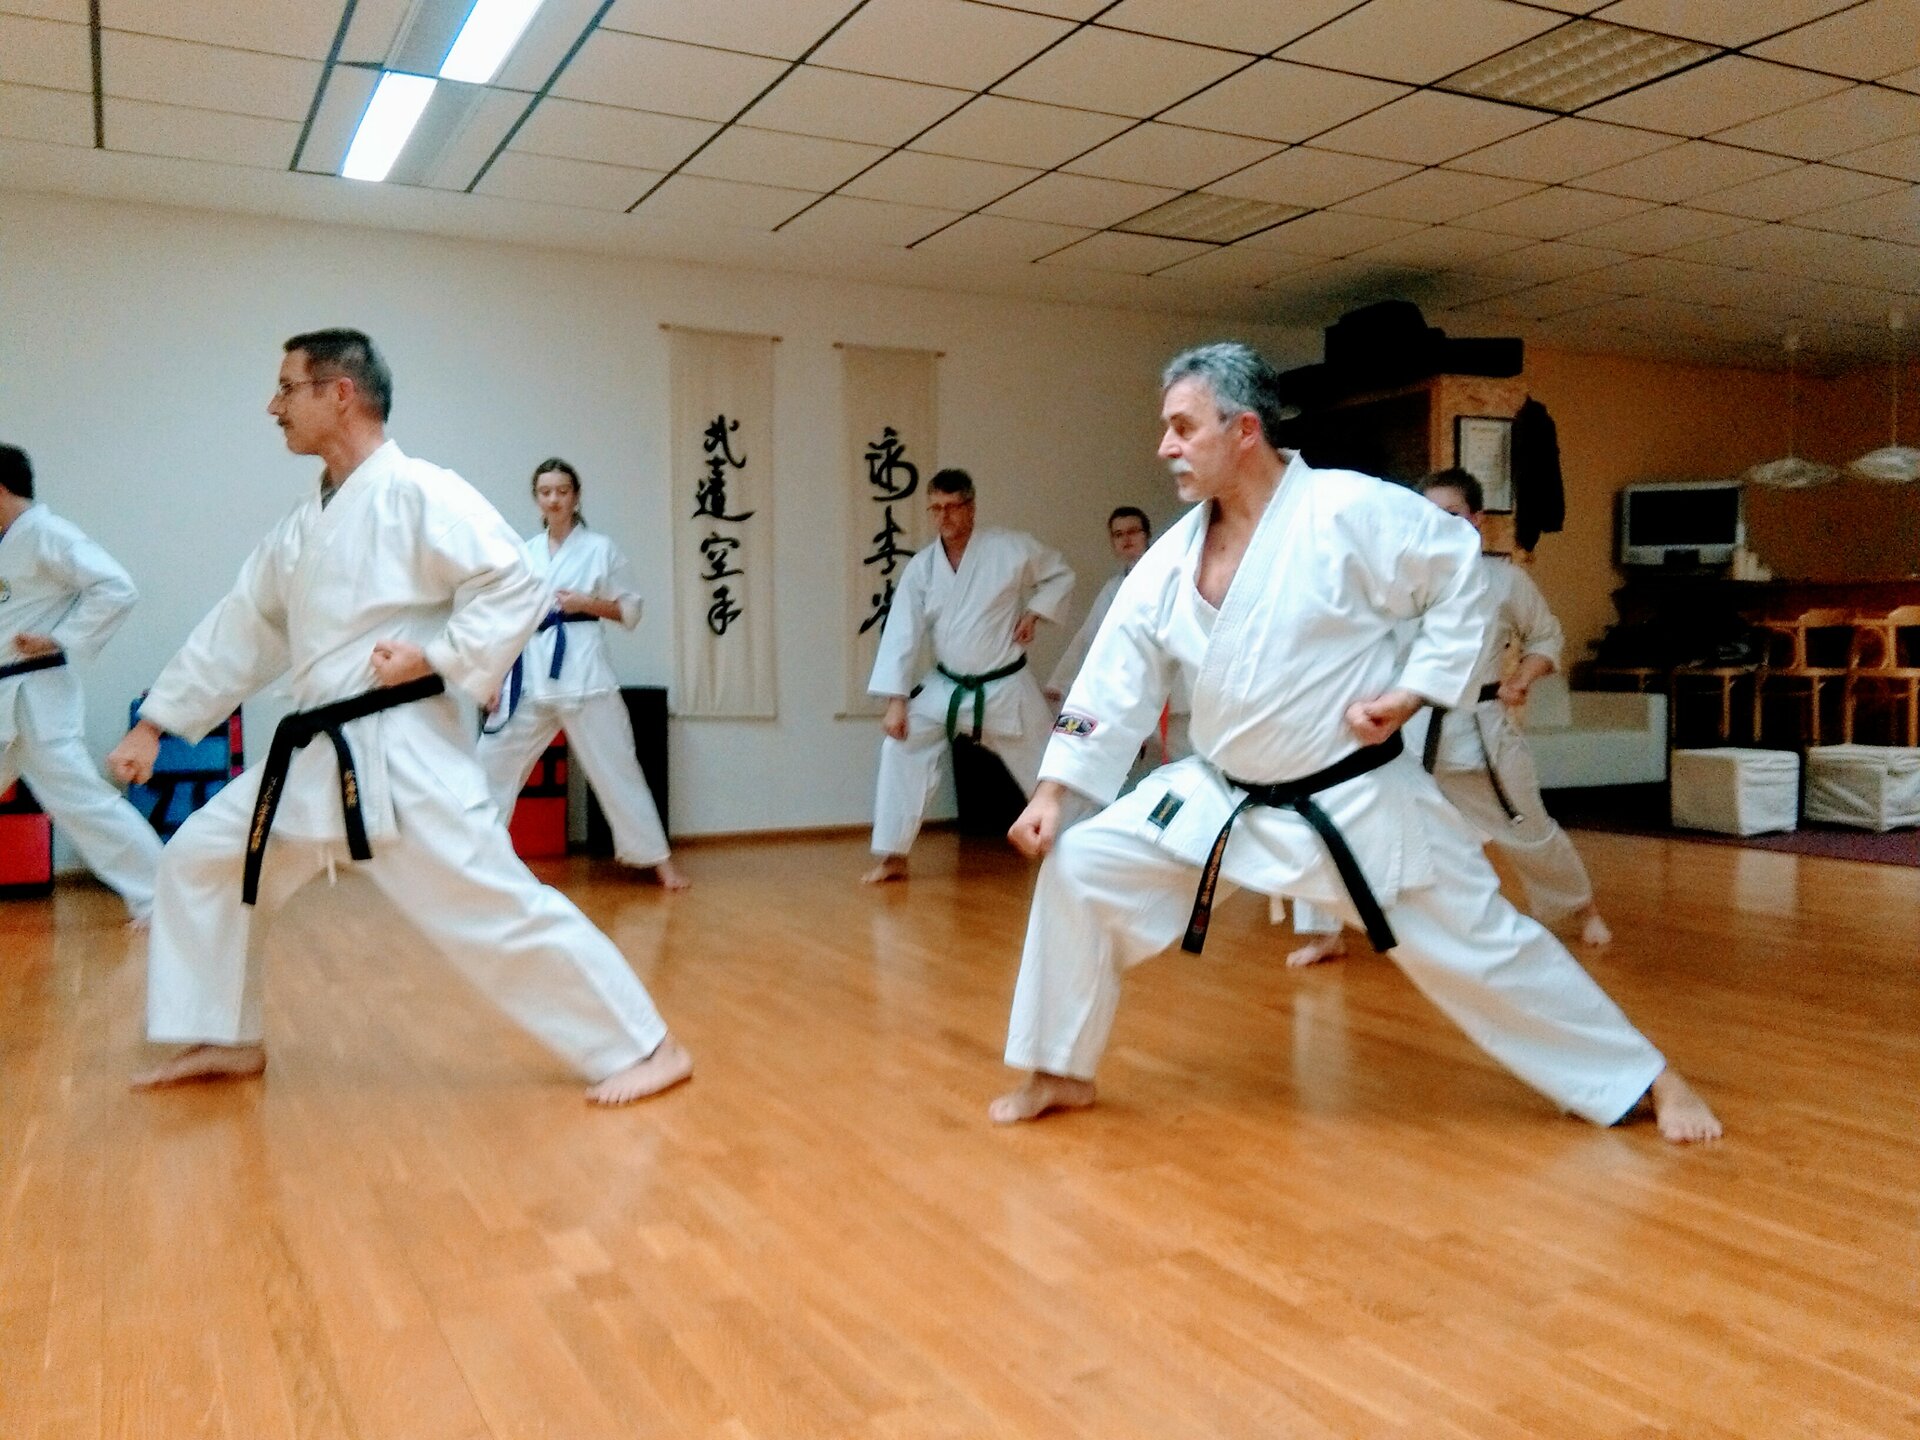 Karate Kata Training